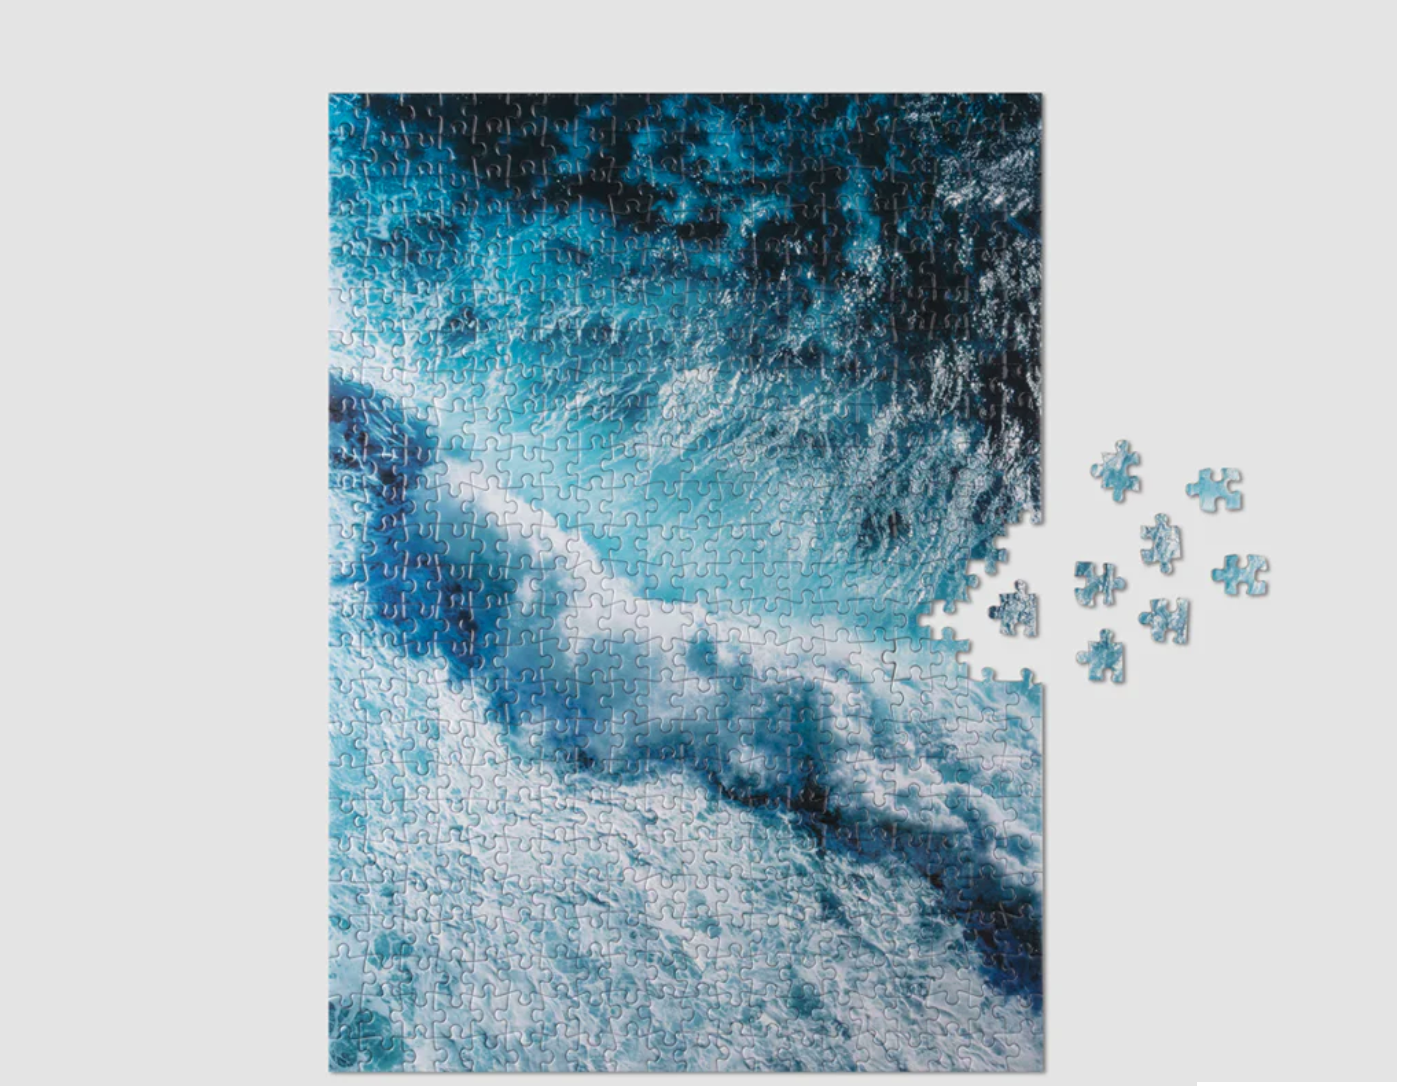 Puzzle - Waves (500 pieces)